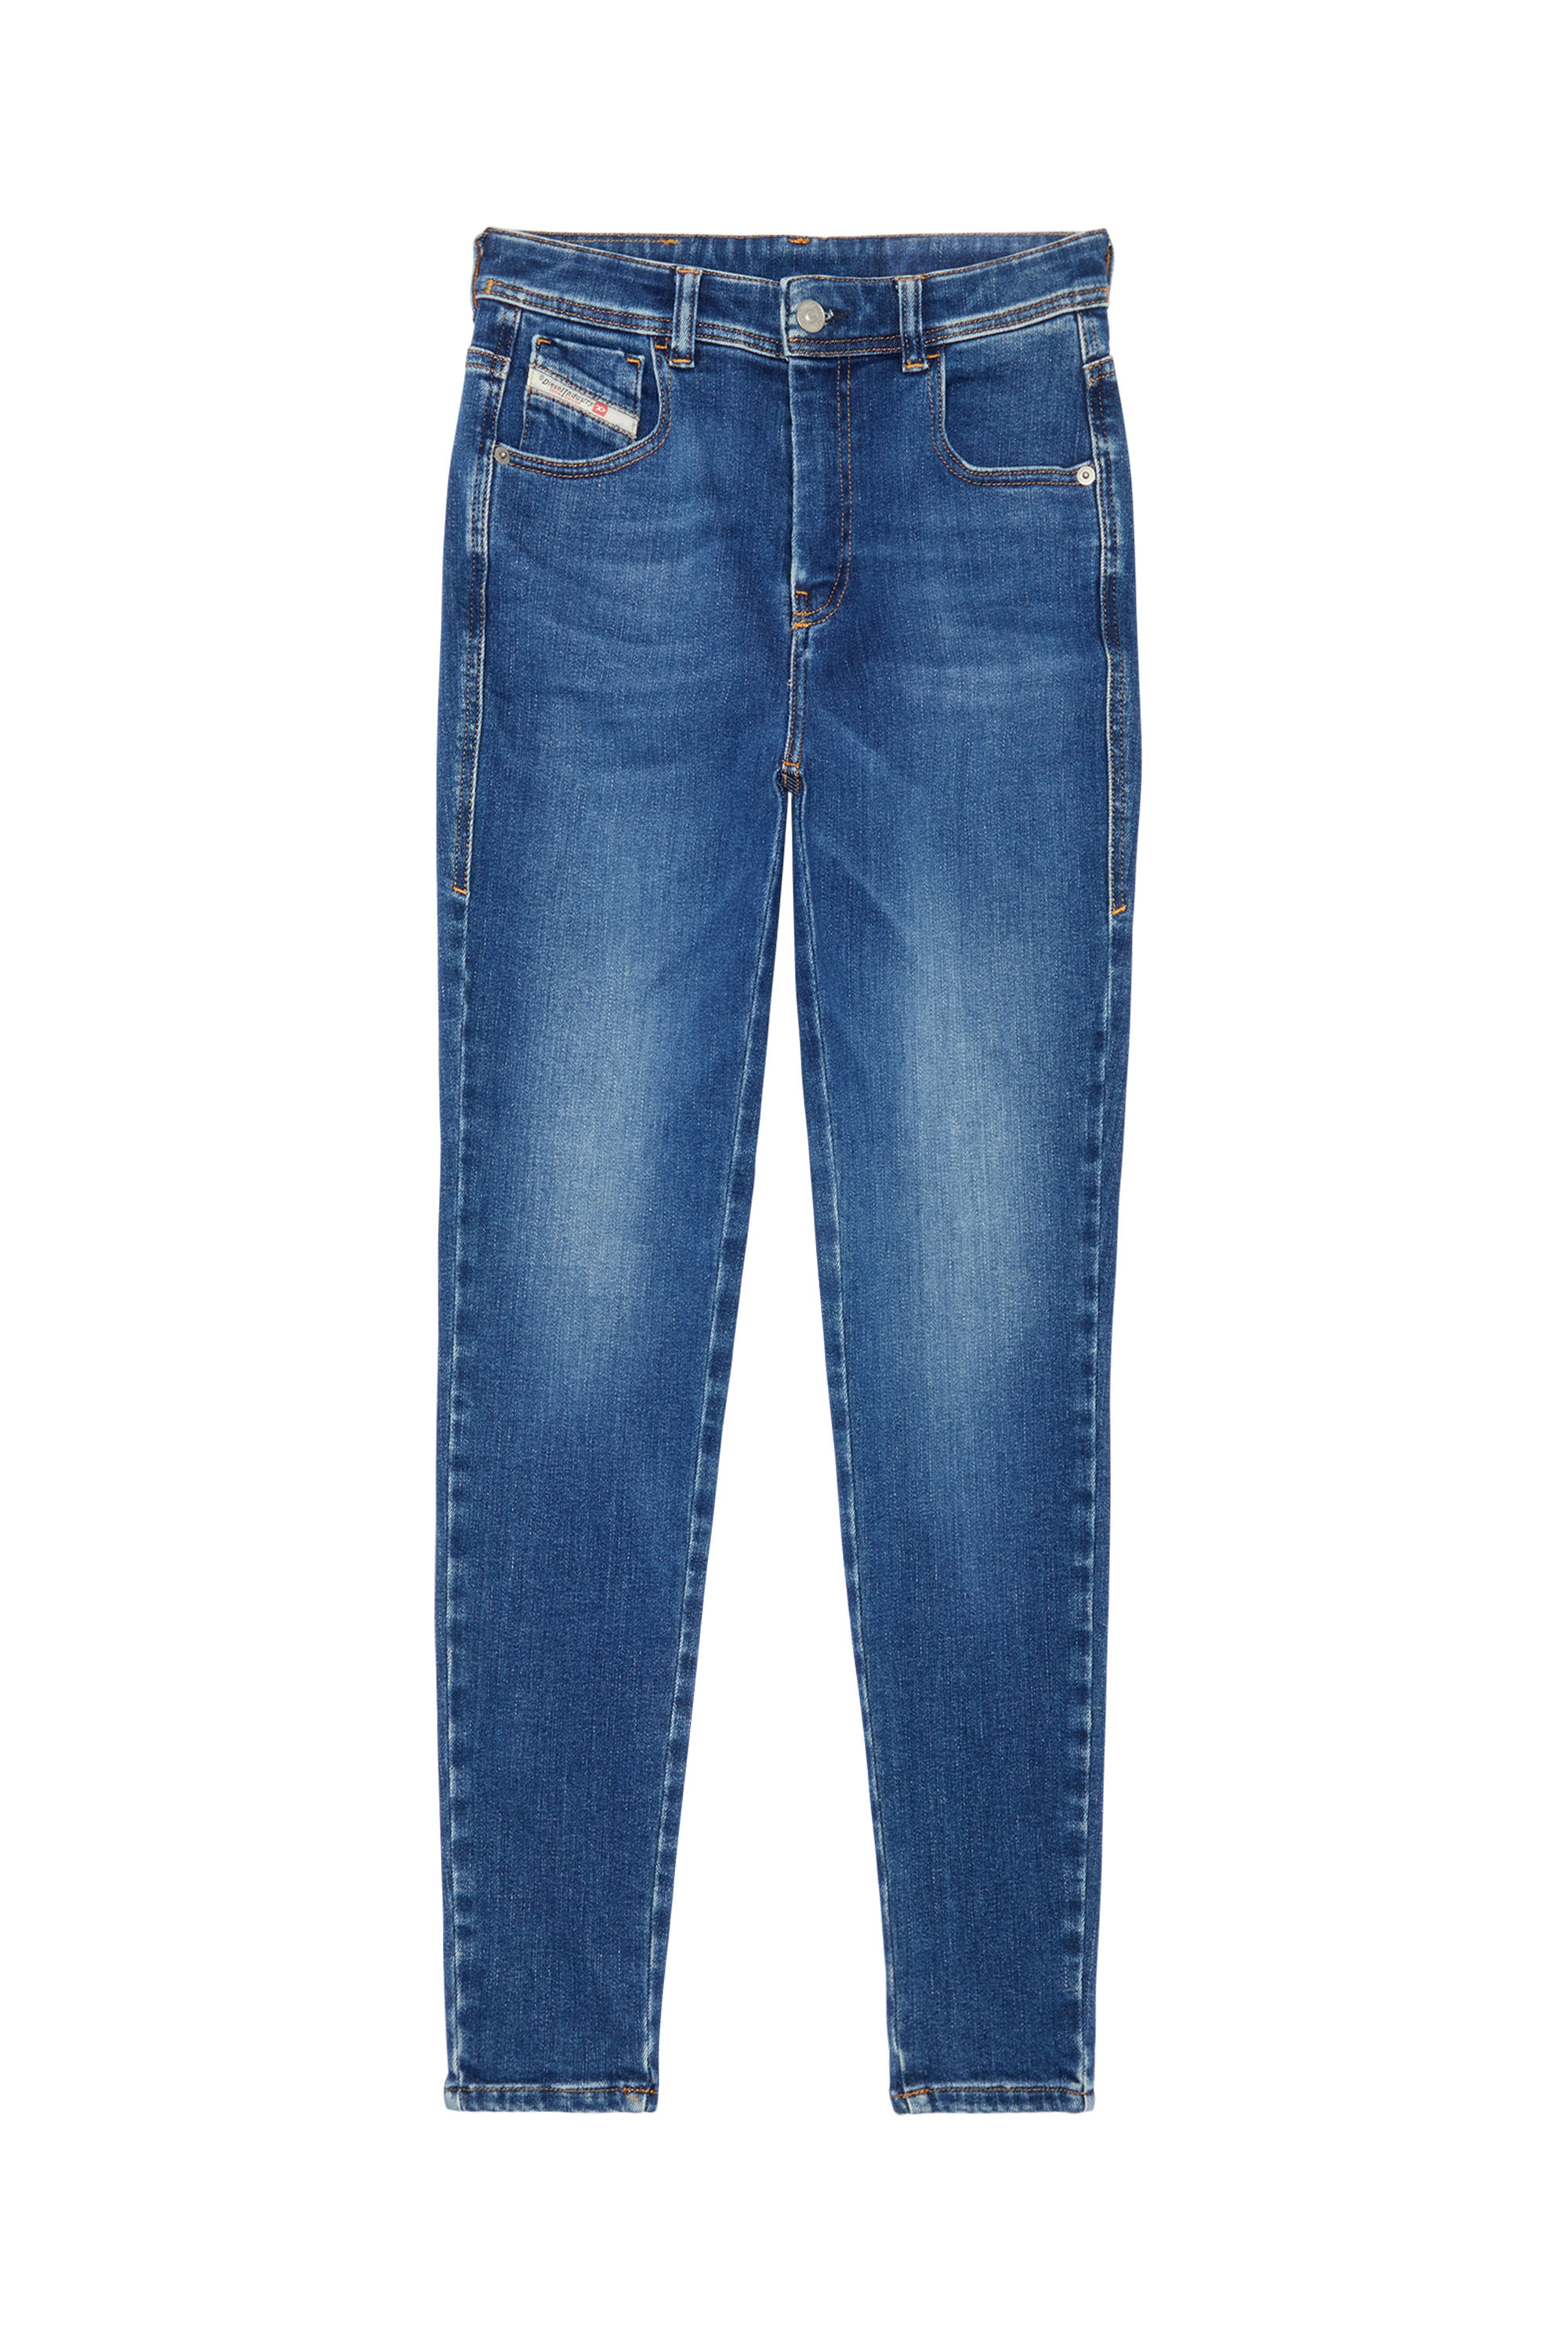 1984 SLANDY-HIGH 09C21 Super skinny Jeans, Bleu Foncé - Jeans